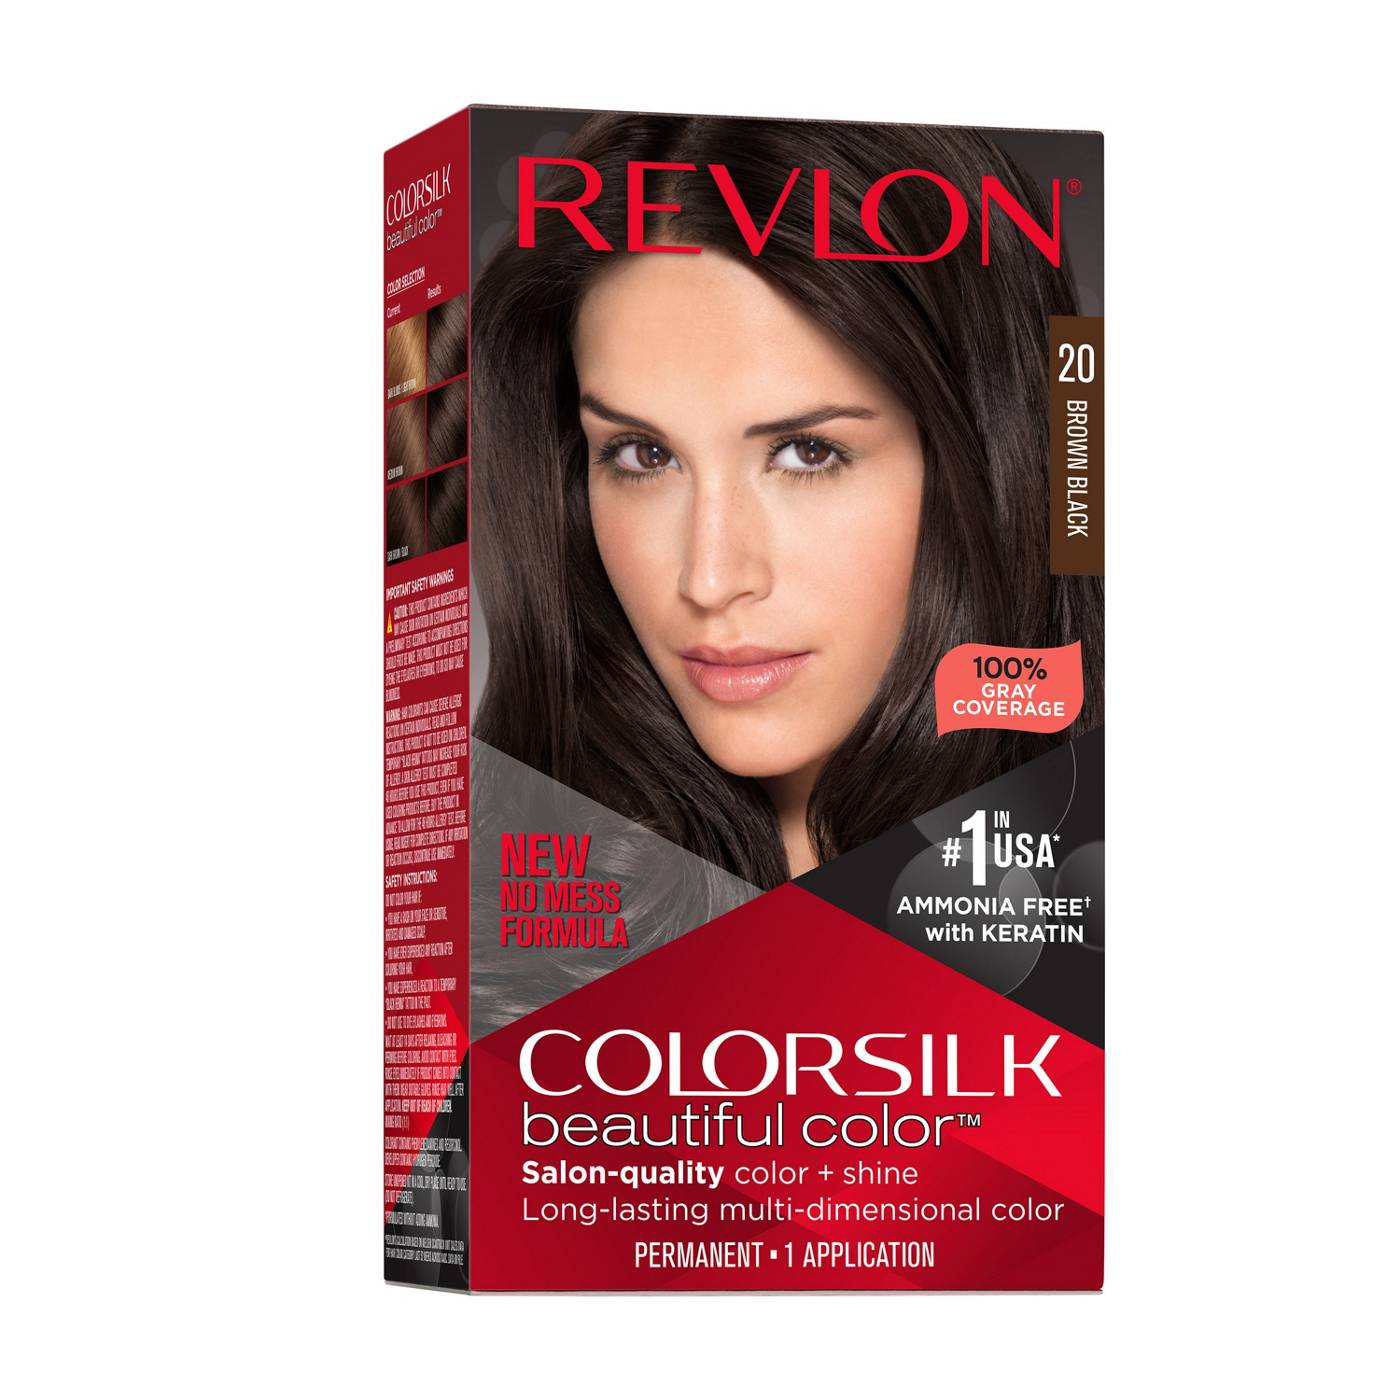 Revlon ColorSilk Hair Color - 20 Brown Black; image 1 of 7